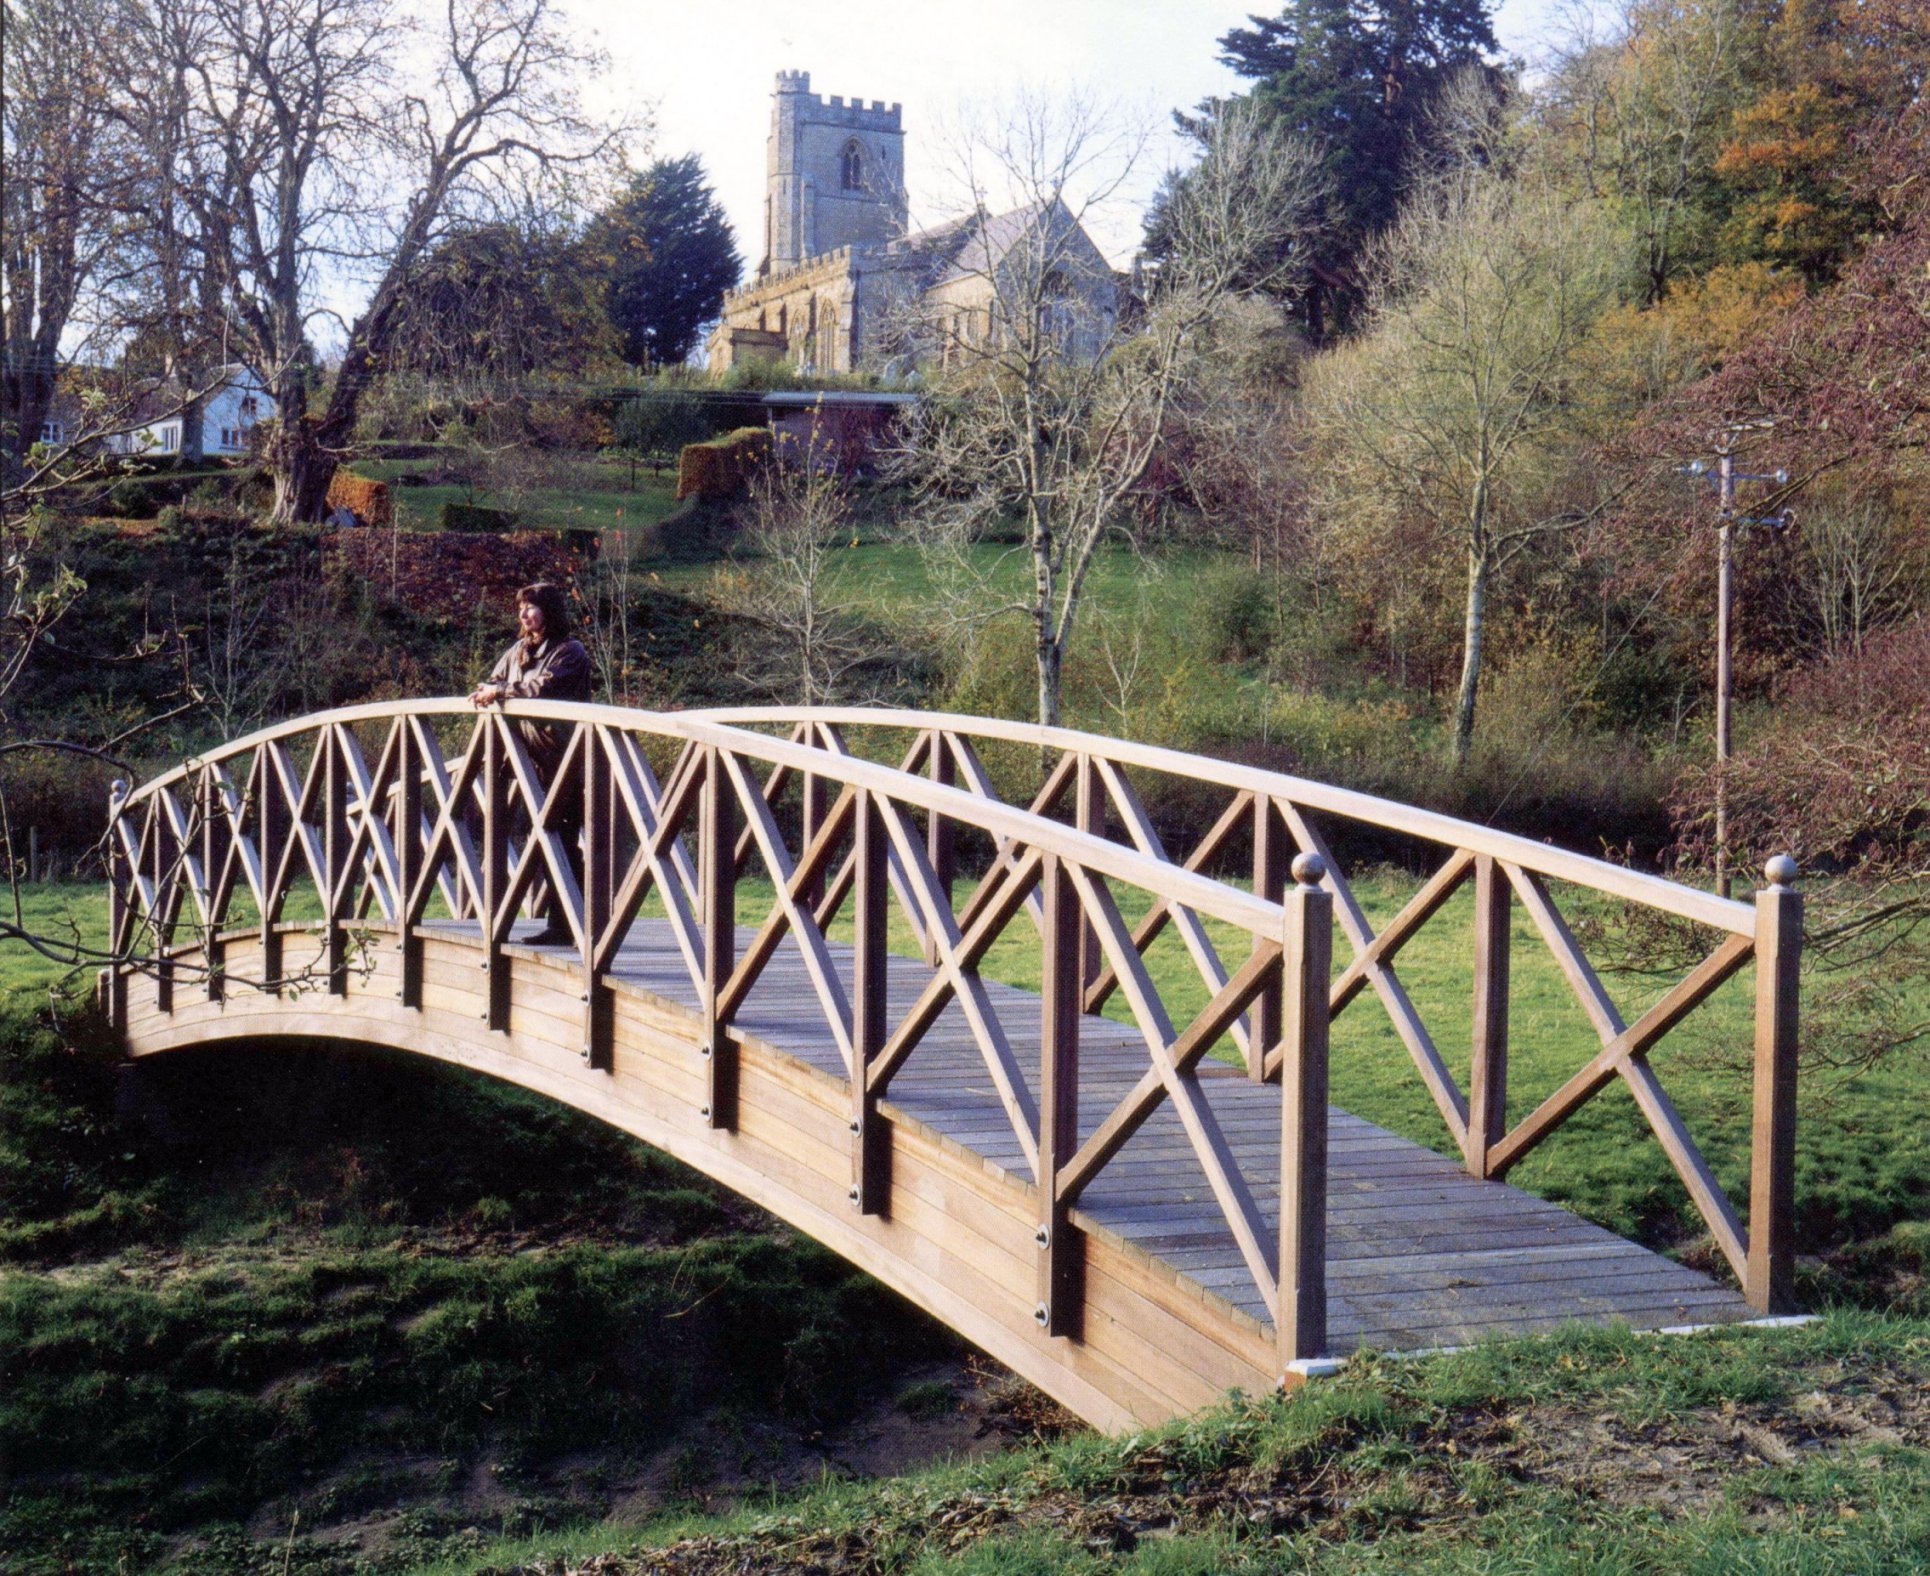 Dowel laminated bridge